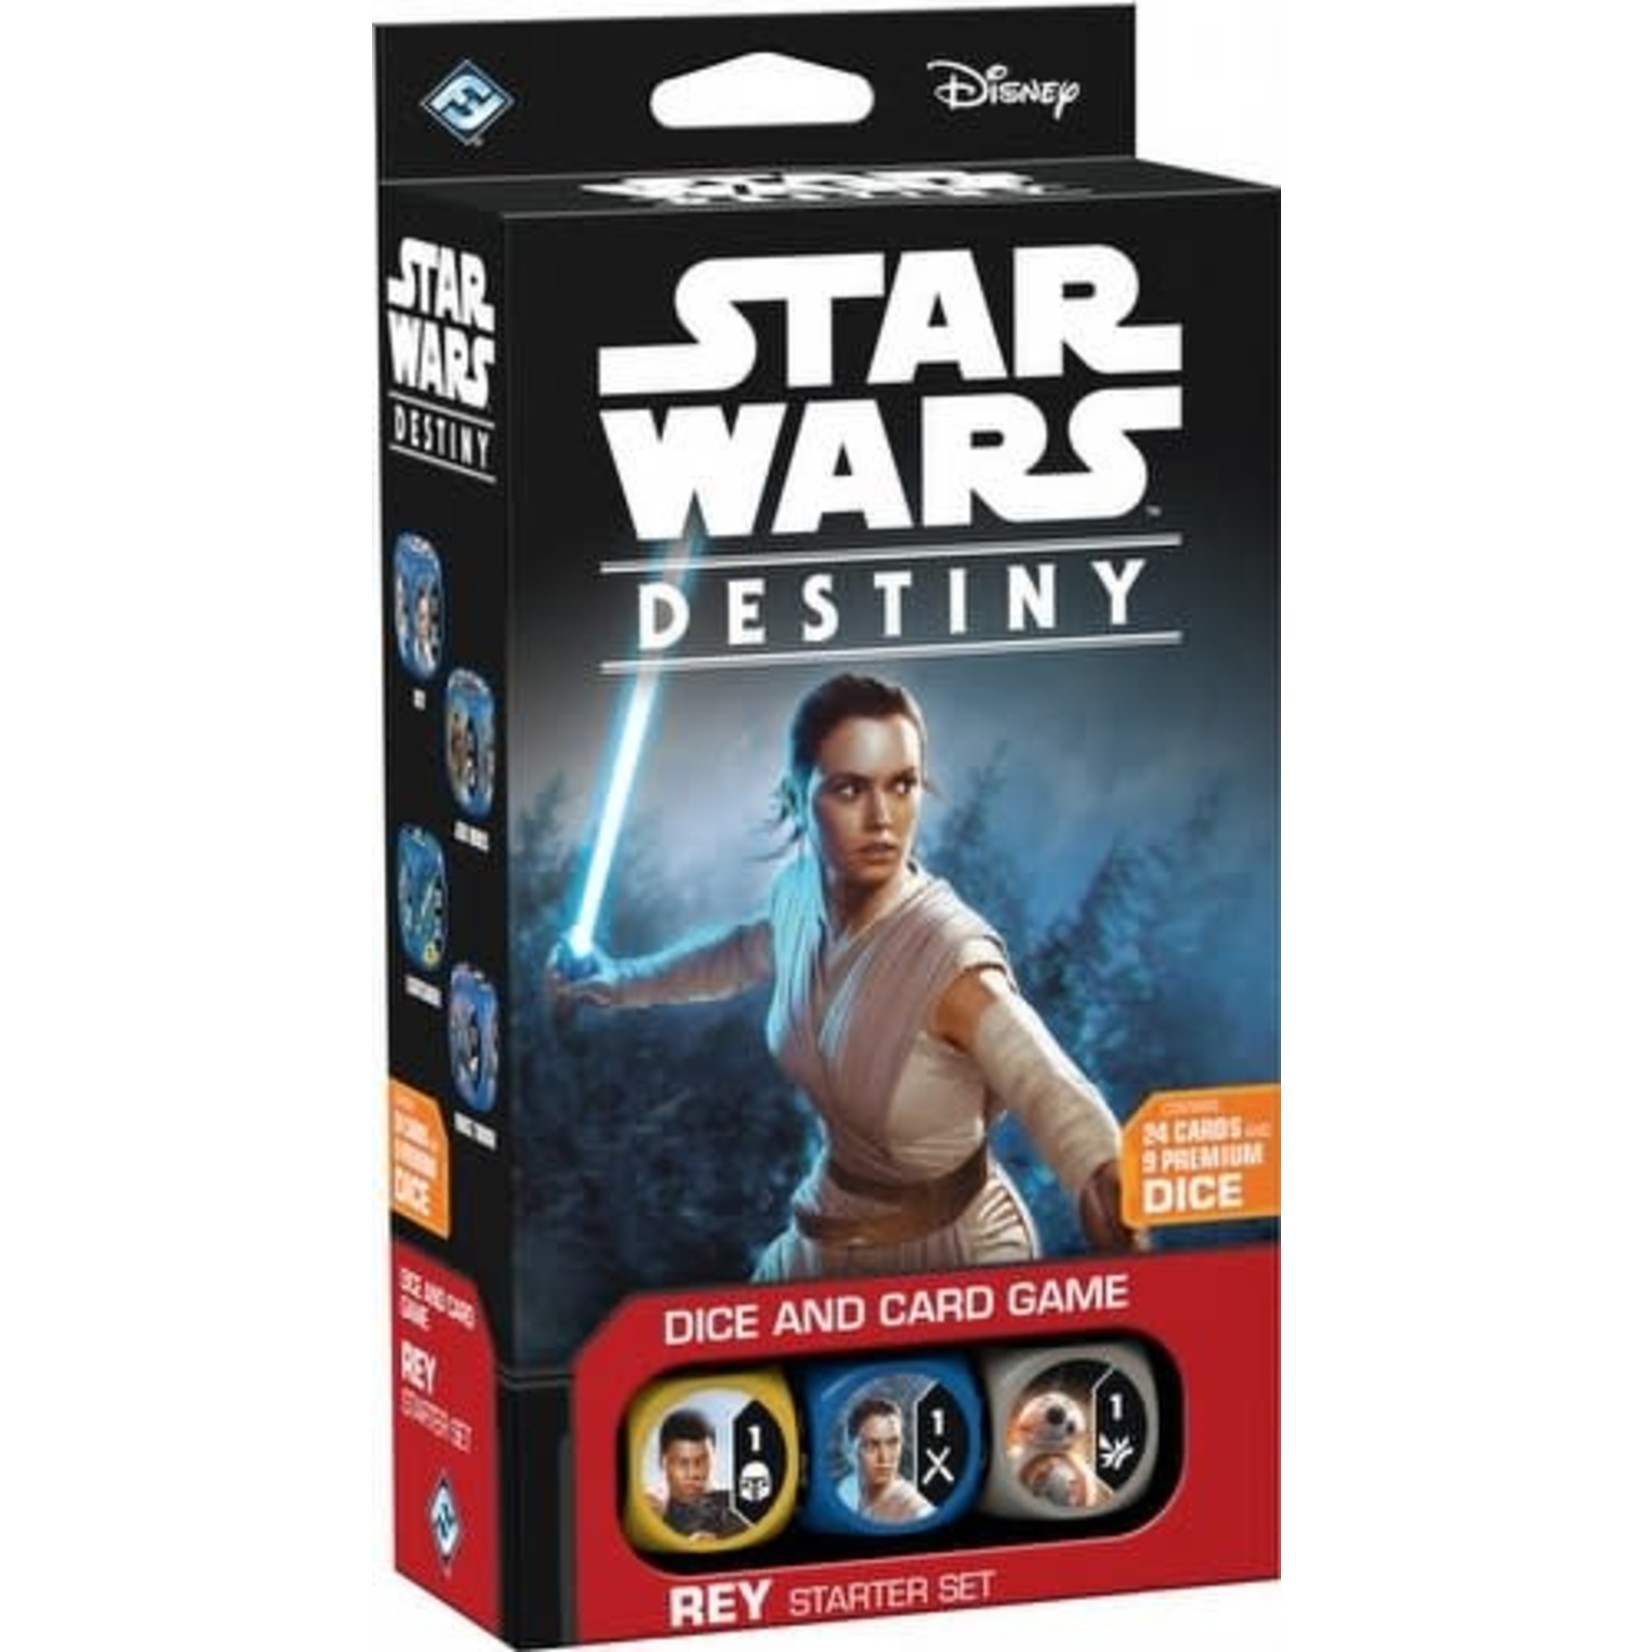 Star Wars Destiny: Rey Starter Set